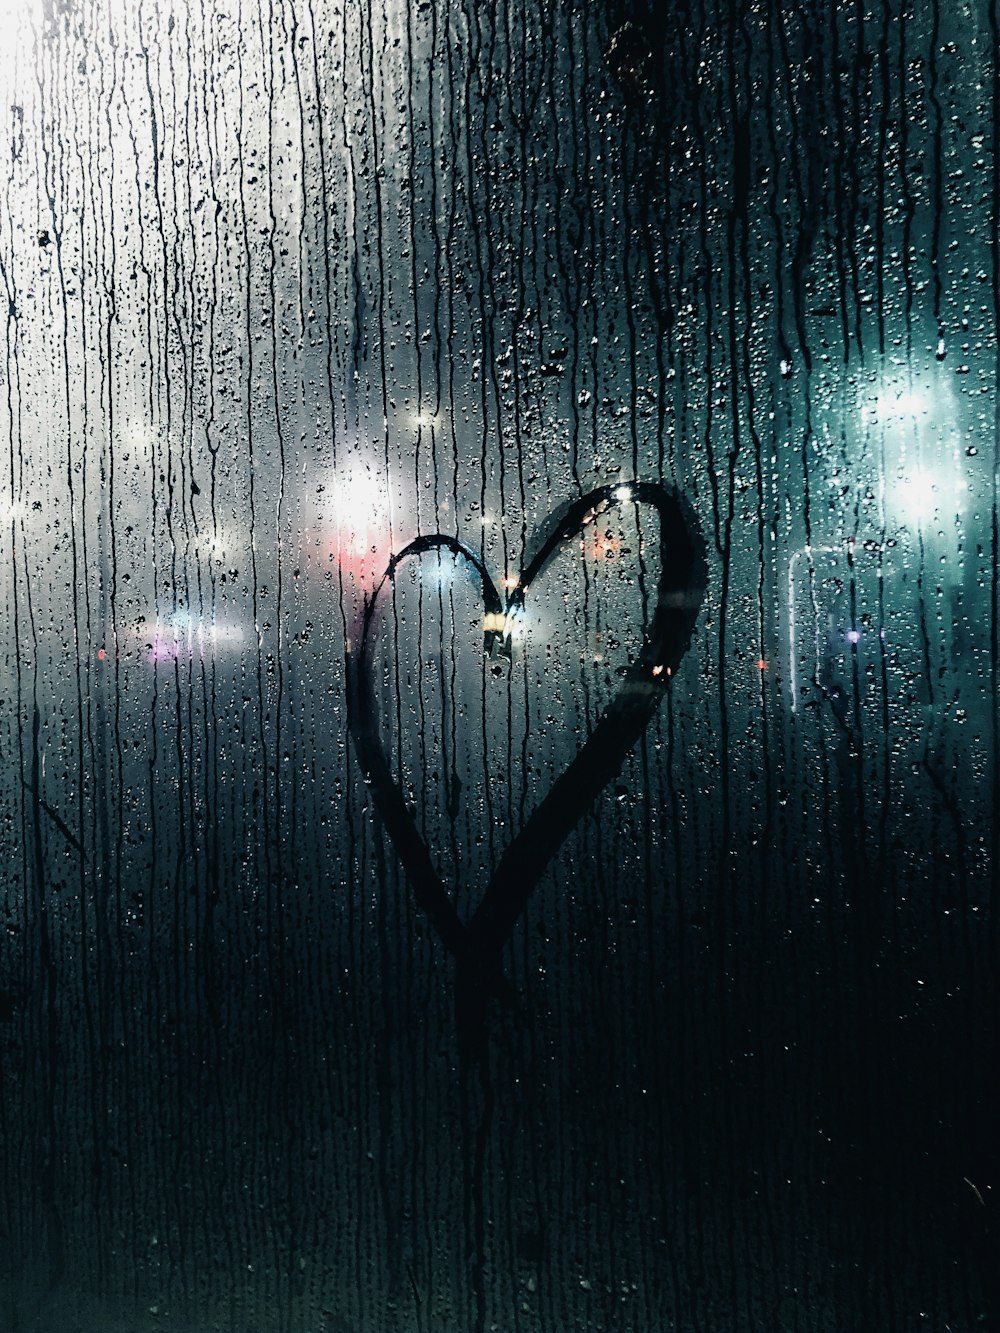 a heart drawn in the rain on a window